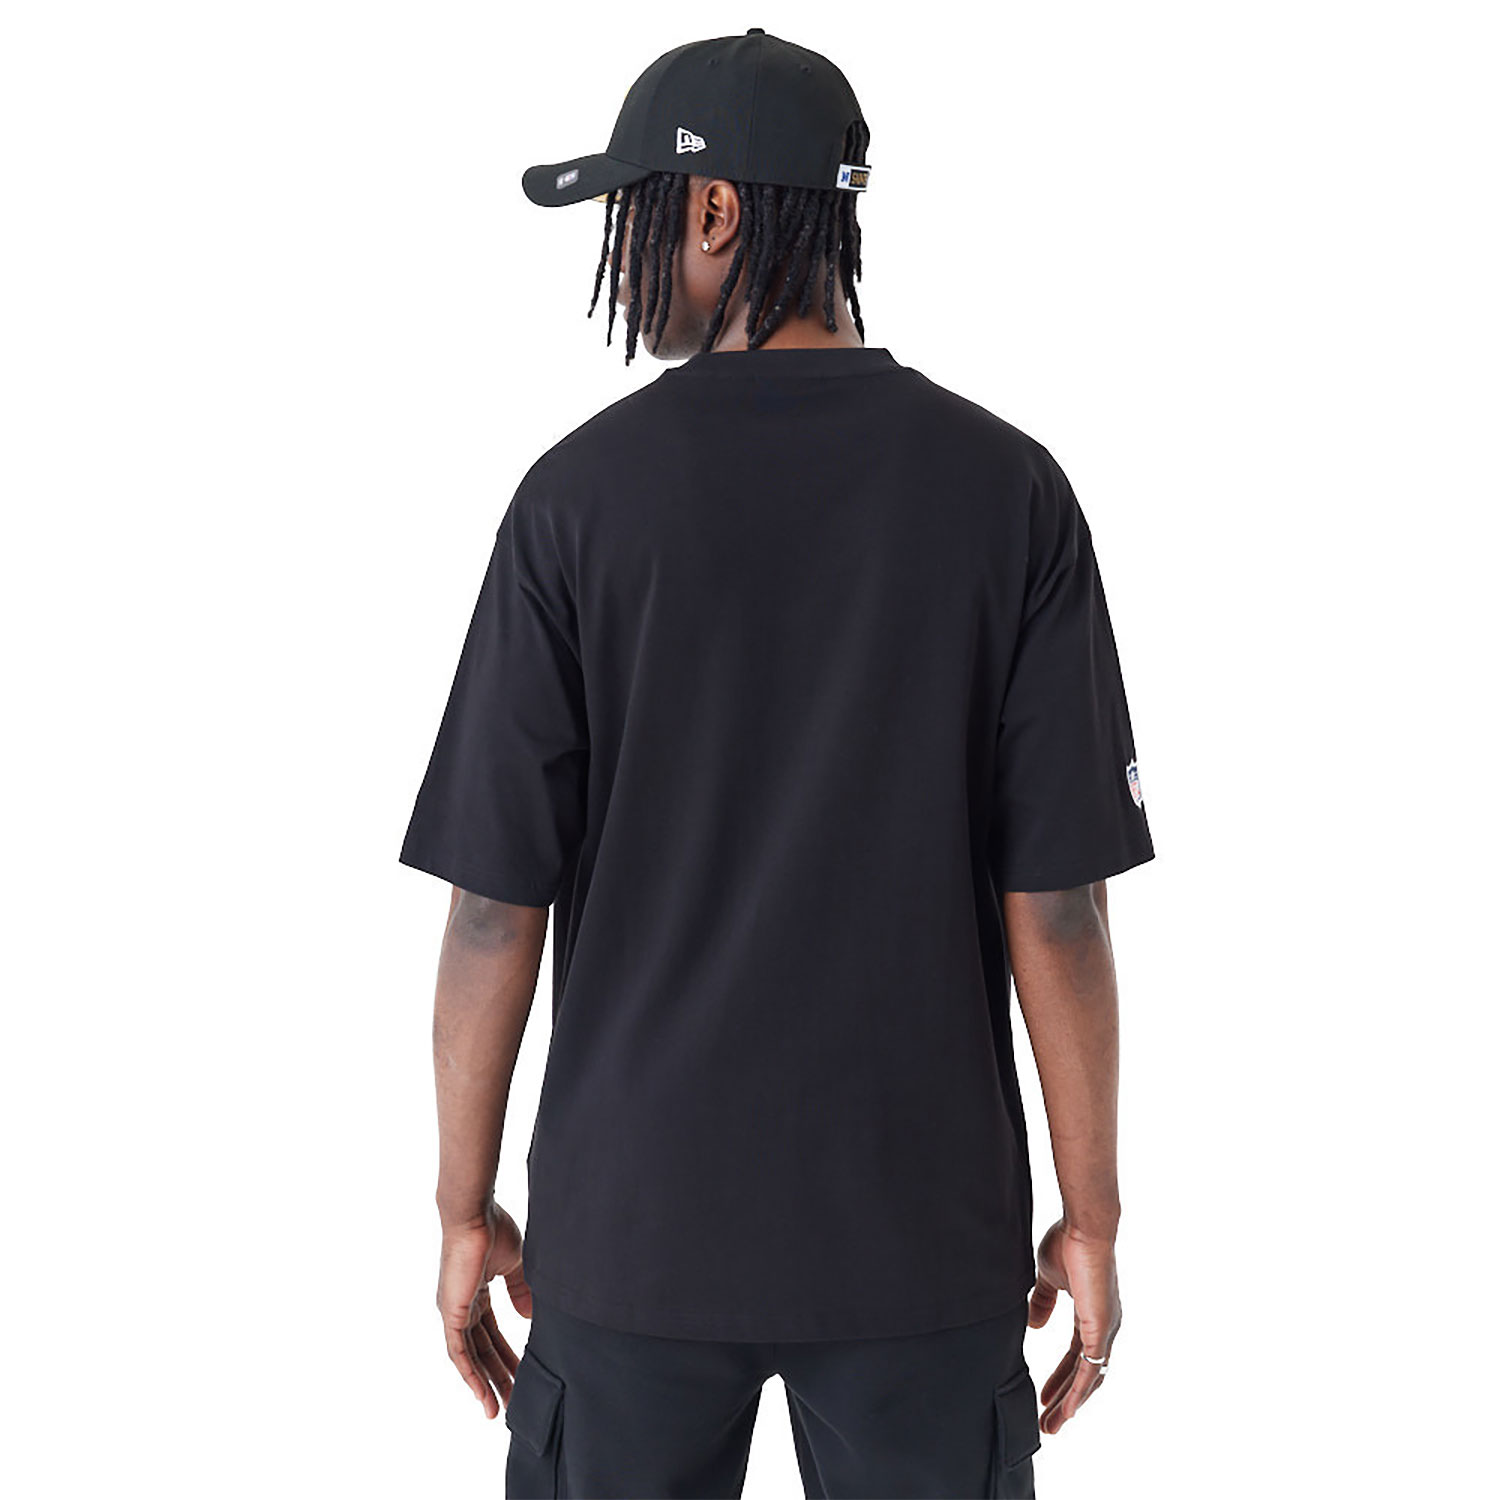 New Orleans Saints NFL Black Oversized T-Shirt